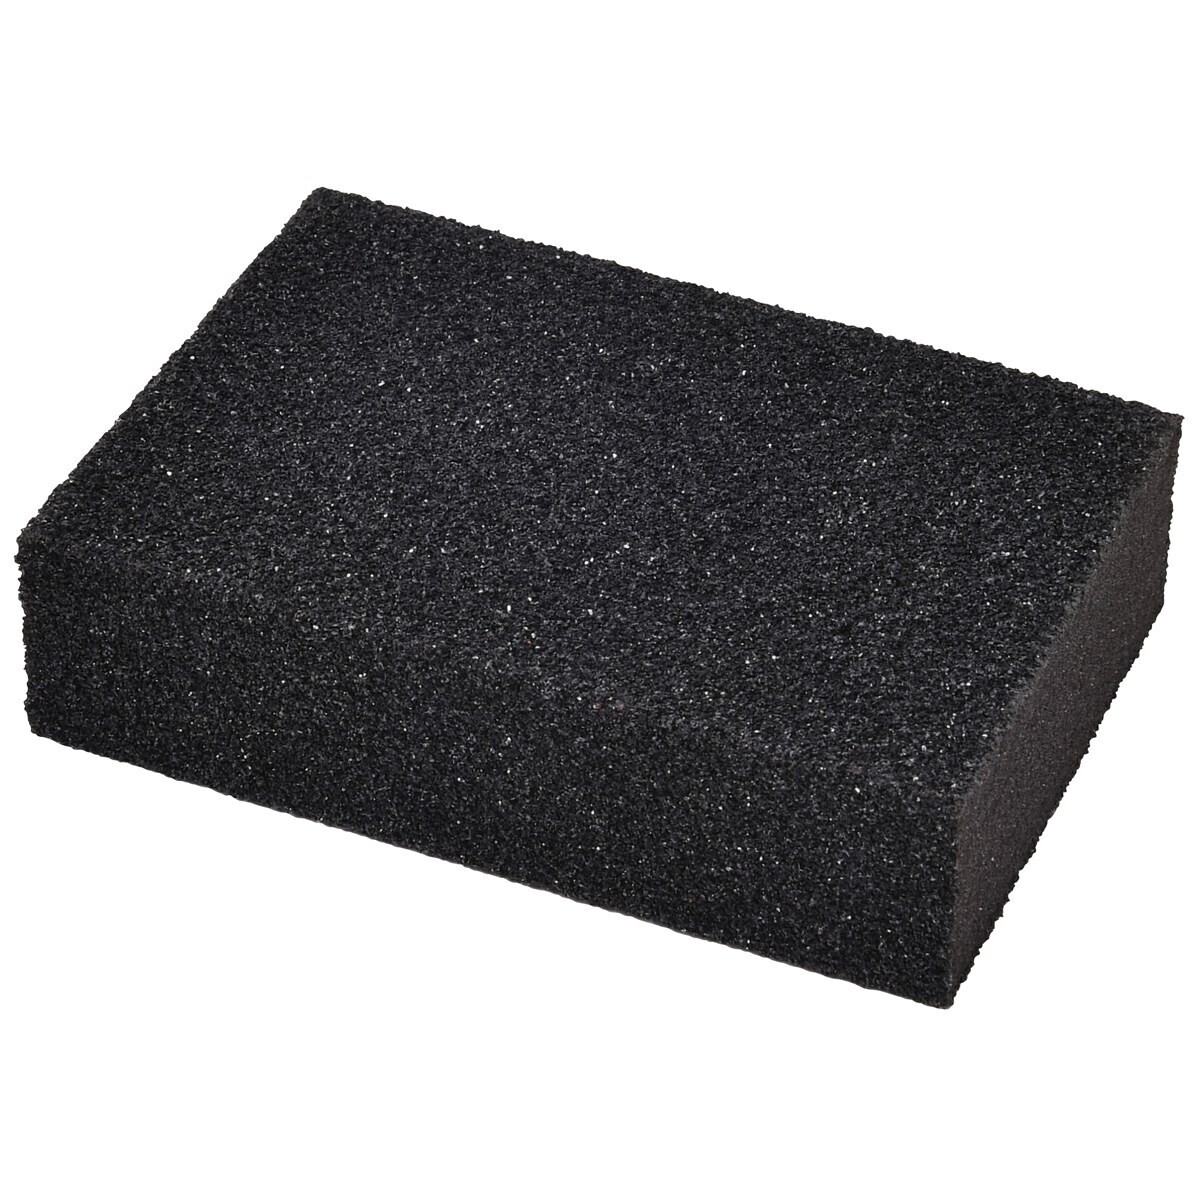 Medium/coarse dual grit sanding sponge (P60/100) (25 x 100 x 70mm)